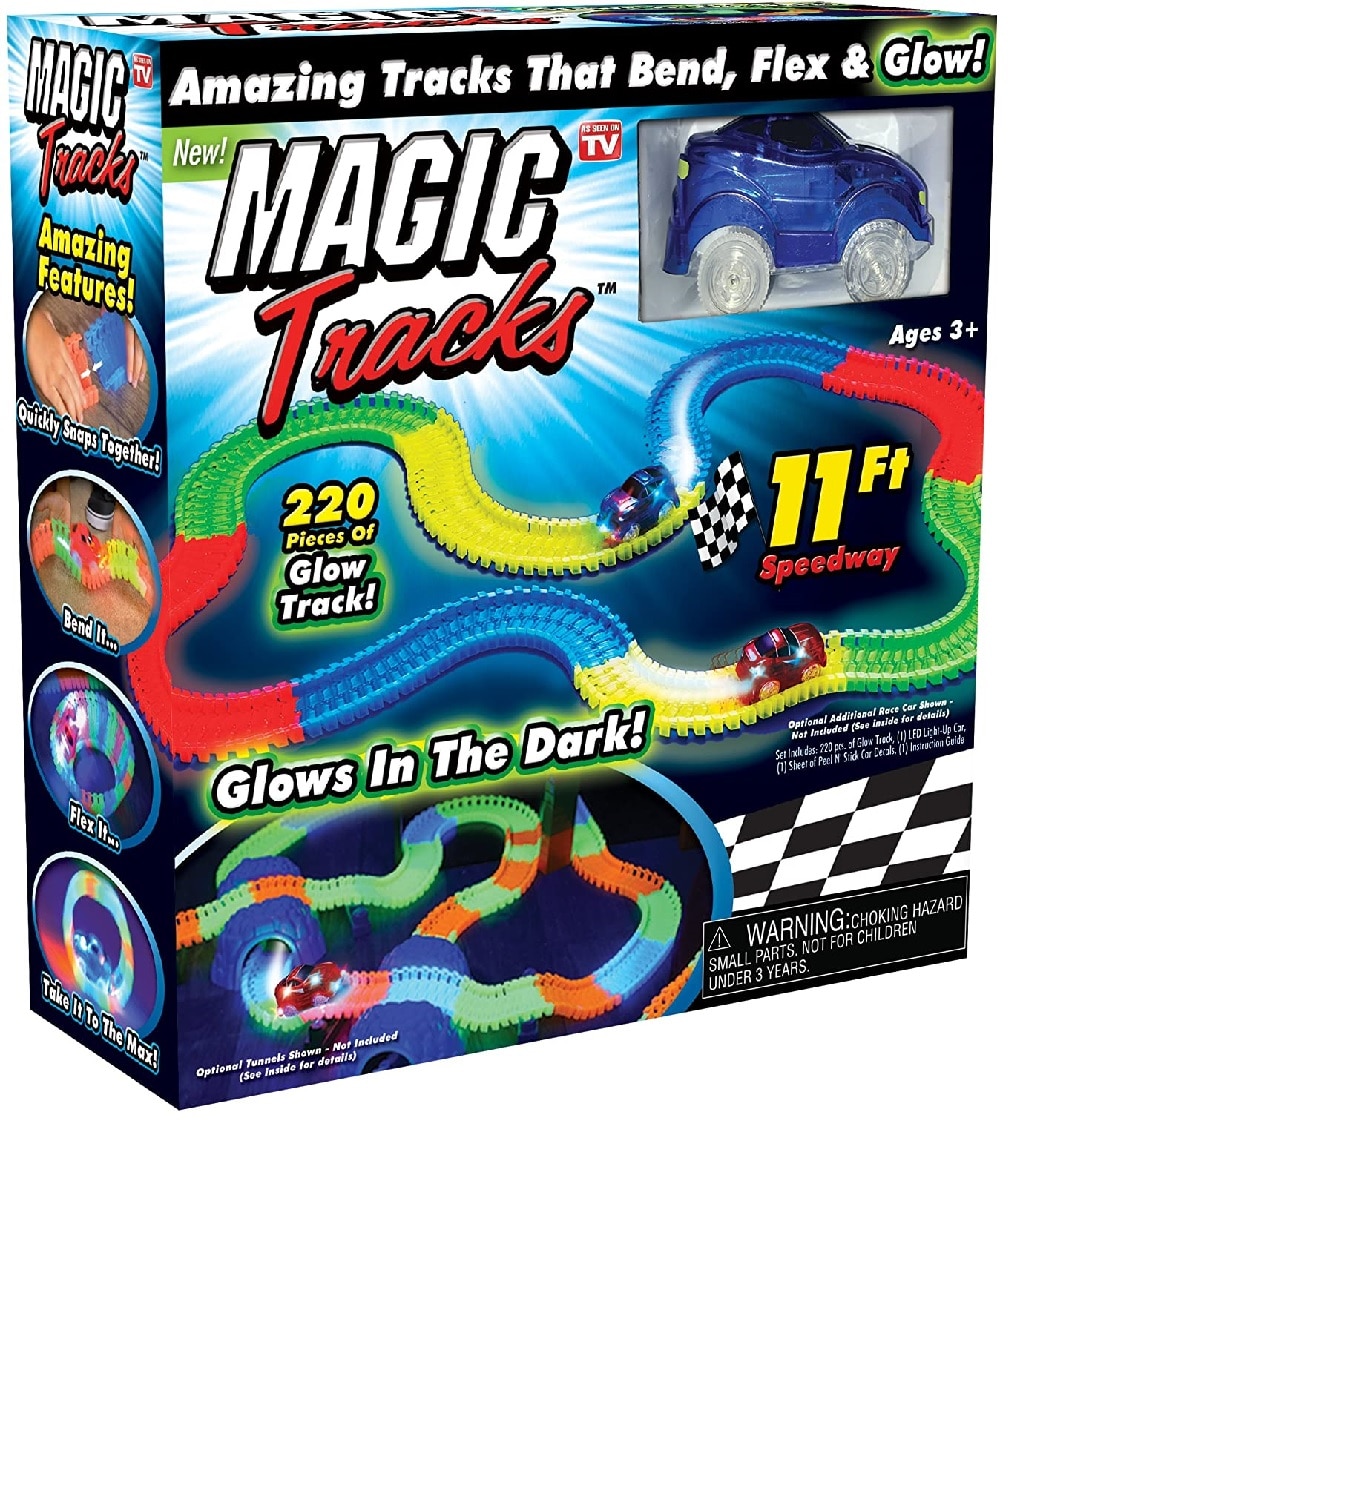 Magic Trac ks Cars Glow in the Dark Light Up Car Race Amazing Racetrack Toy 